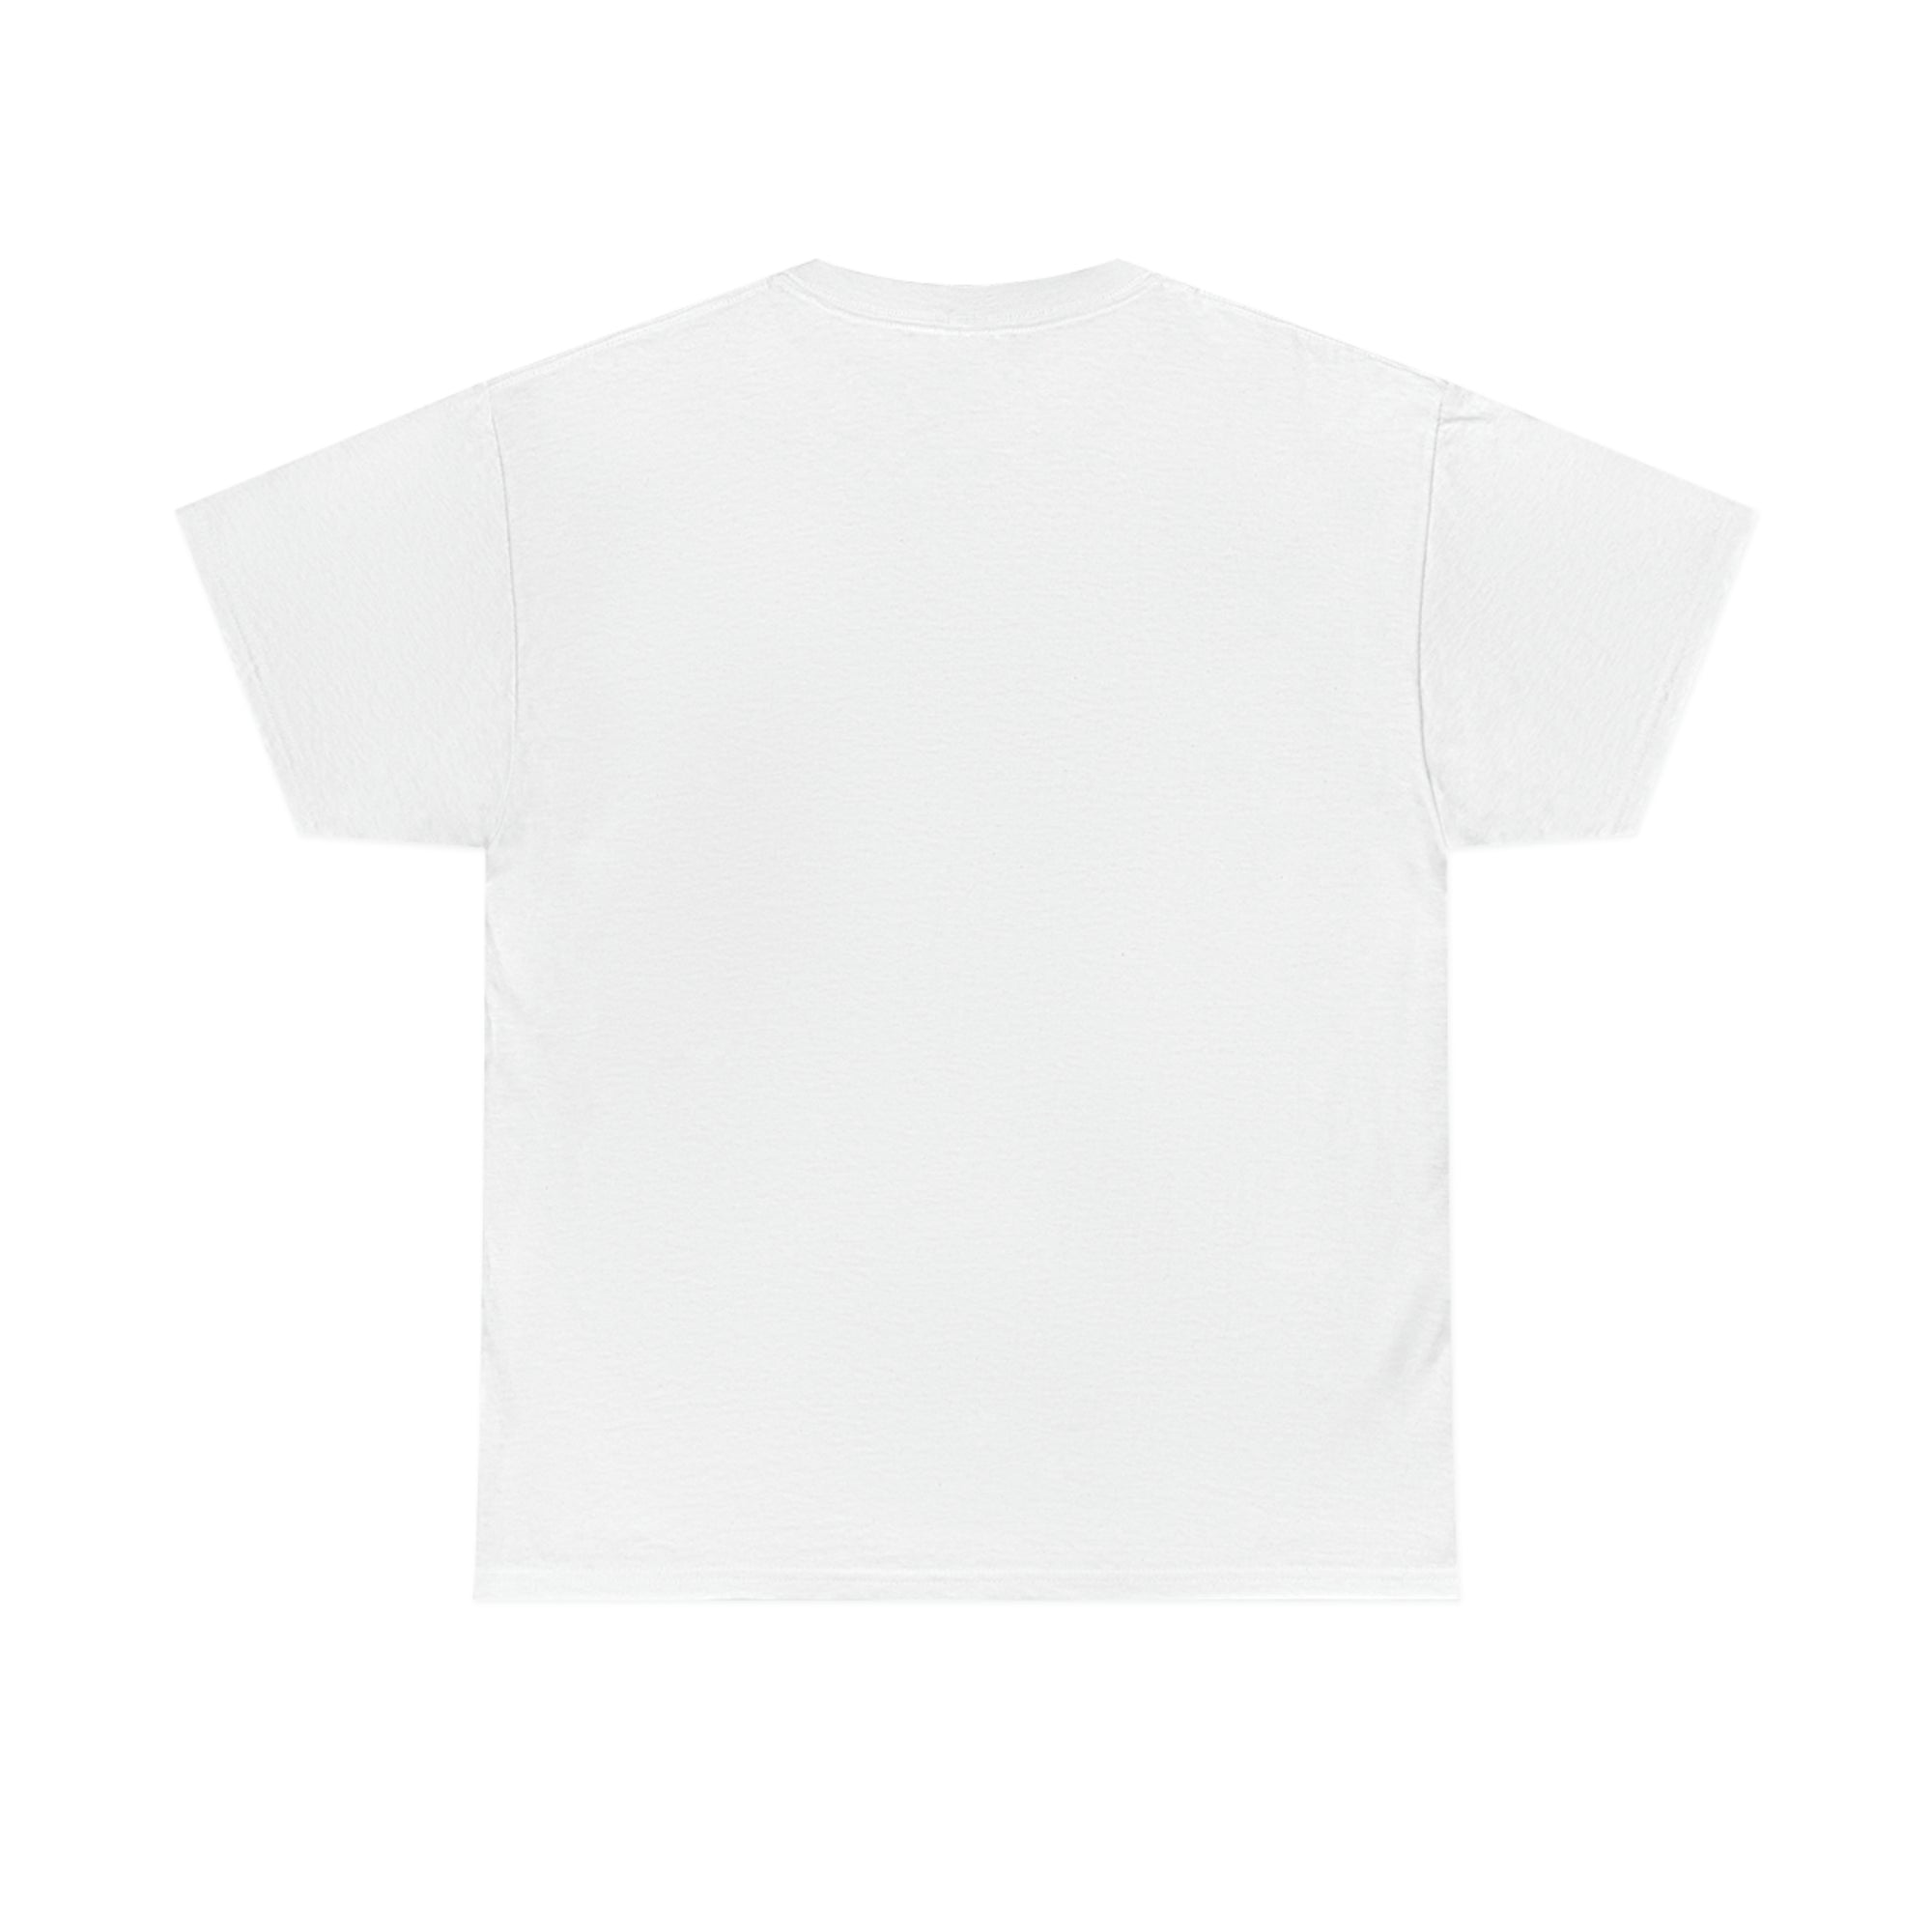 I am EMPOWERED - Unisex T-shirt